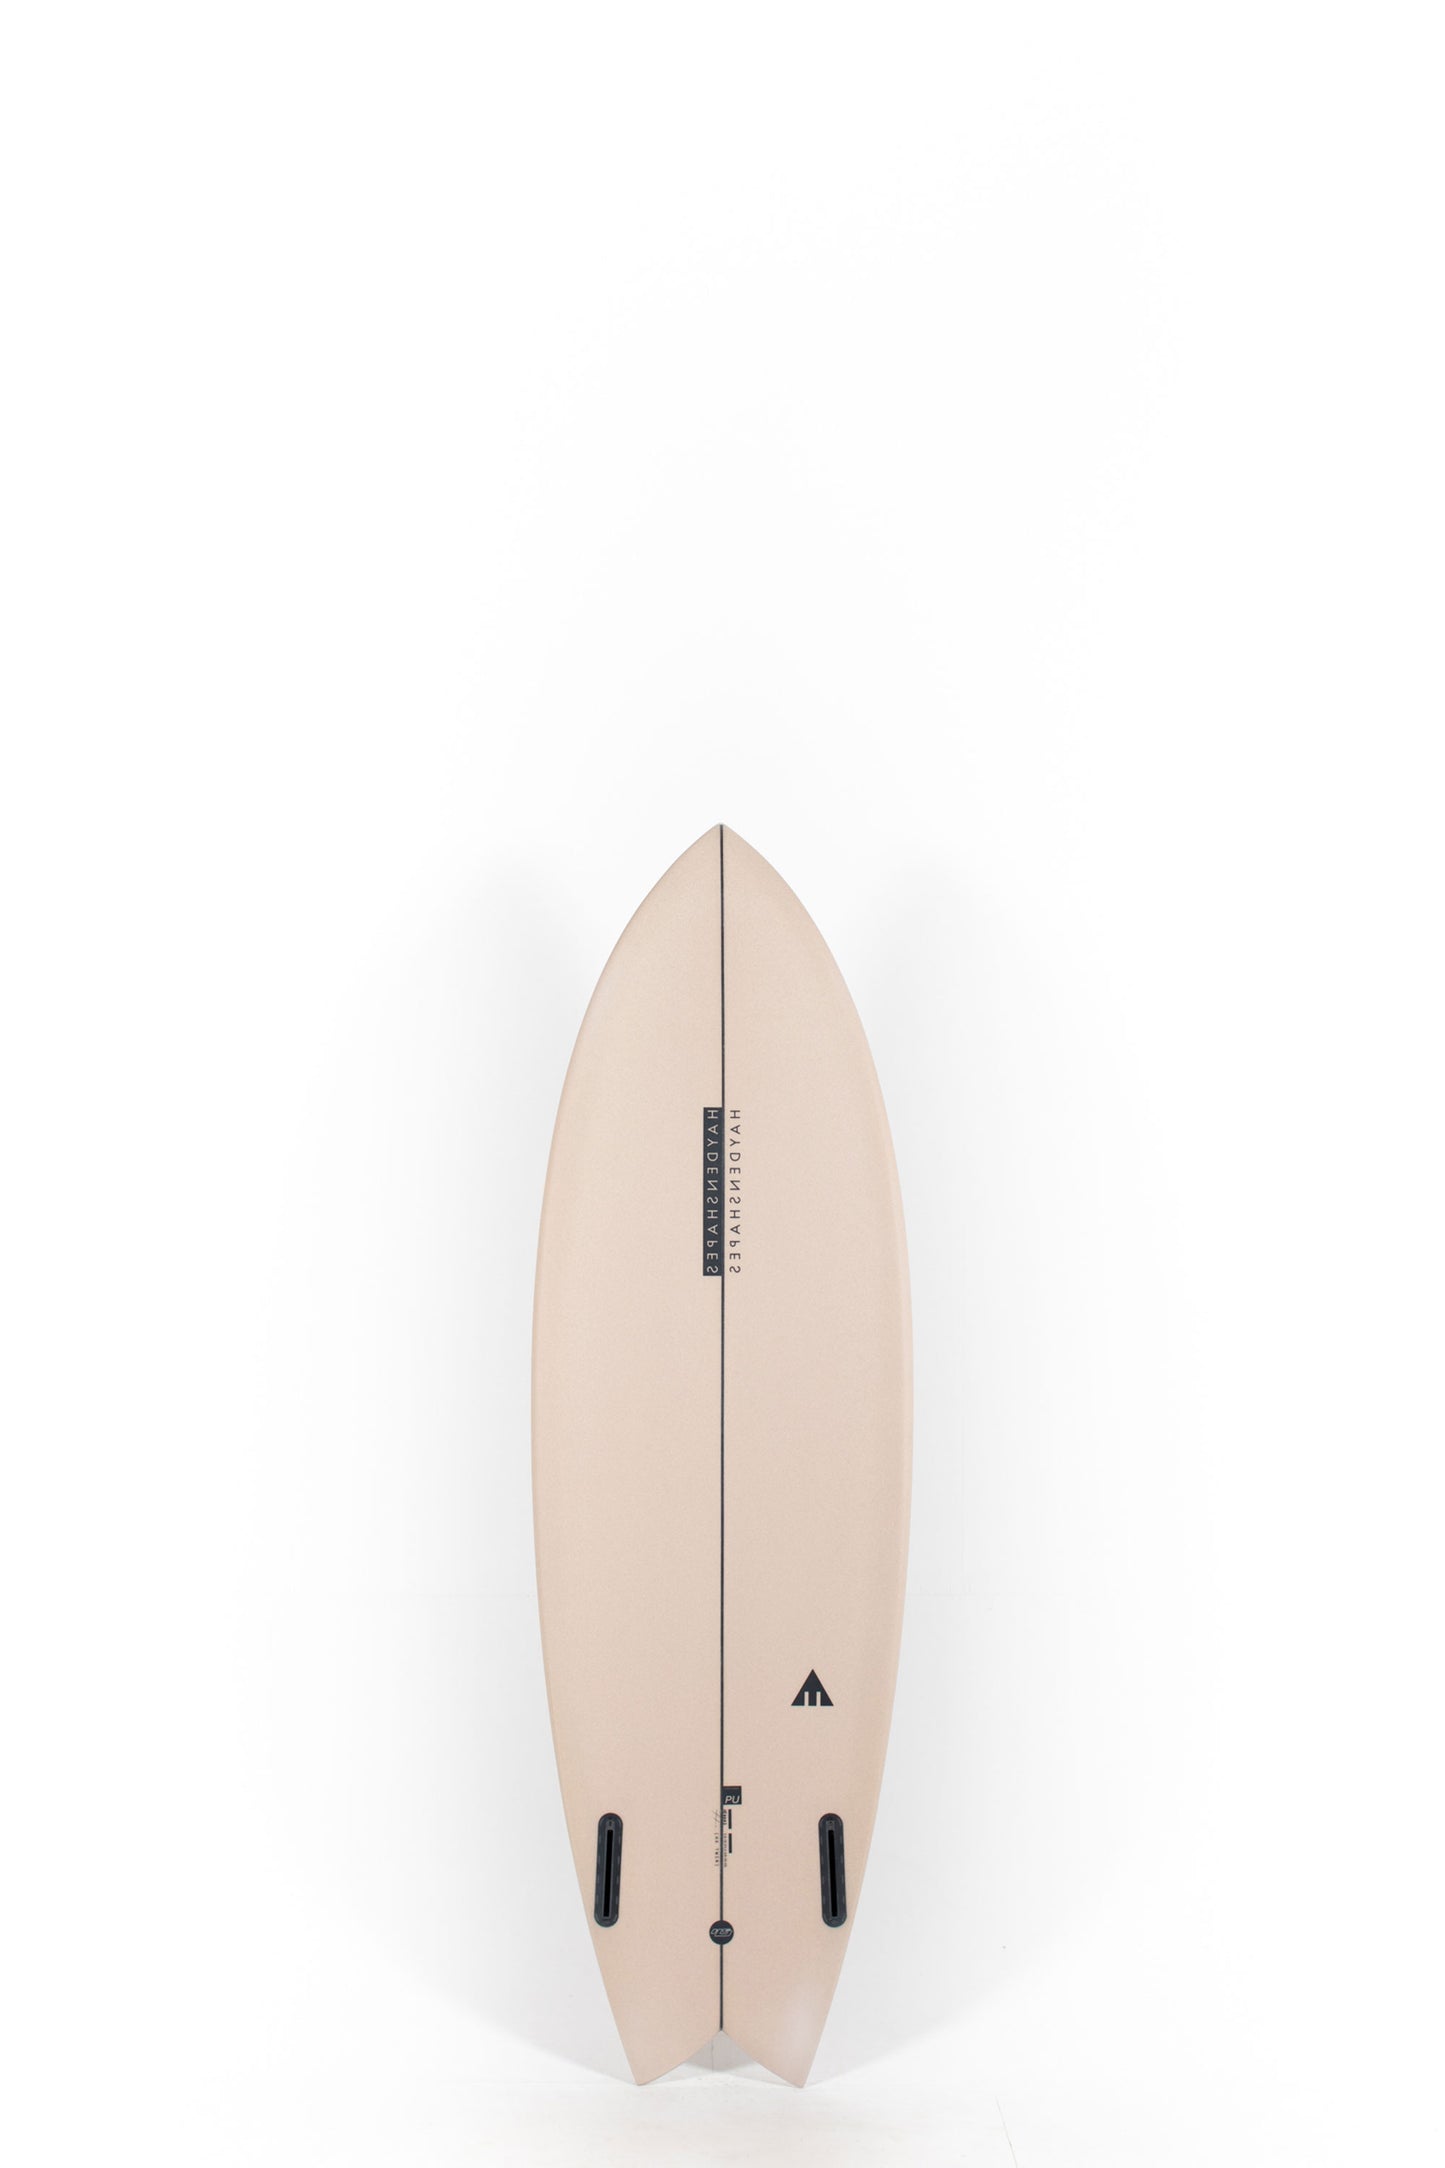 Pukas Surf Shop - HaydenShapes Surfboard - HYPTO KRYPTO TWIN PU - 5'6" X 19 3/4" X 2 3/8" - 28.43L